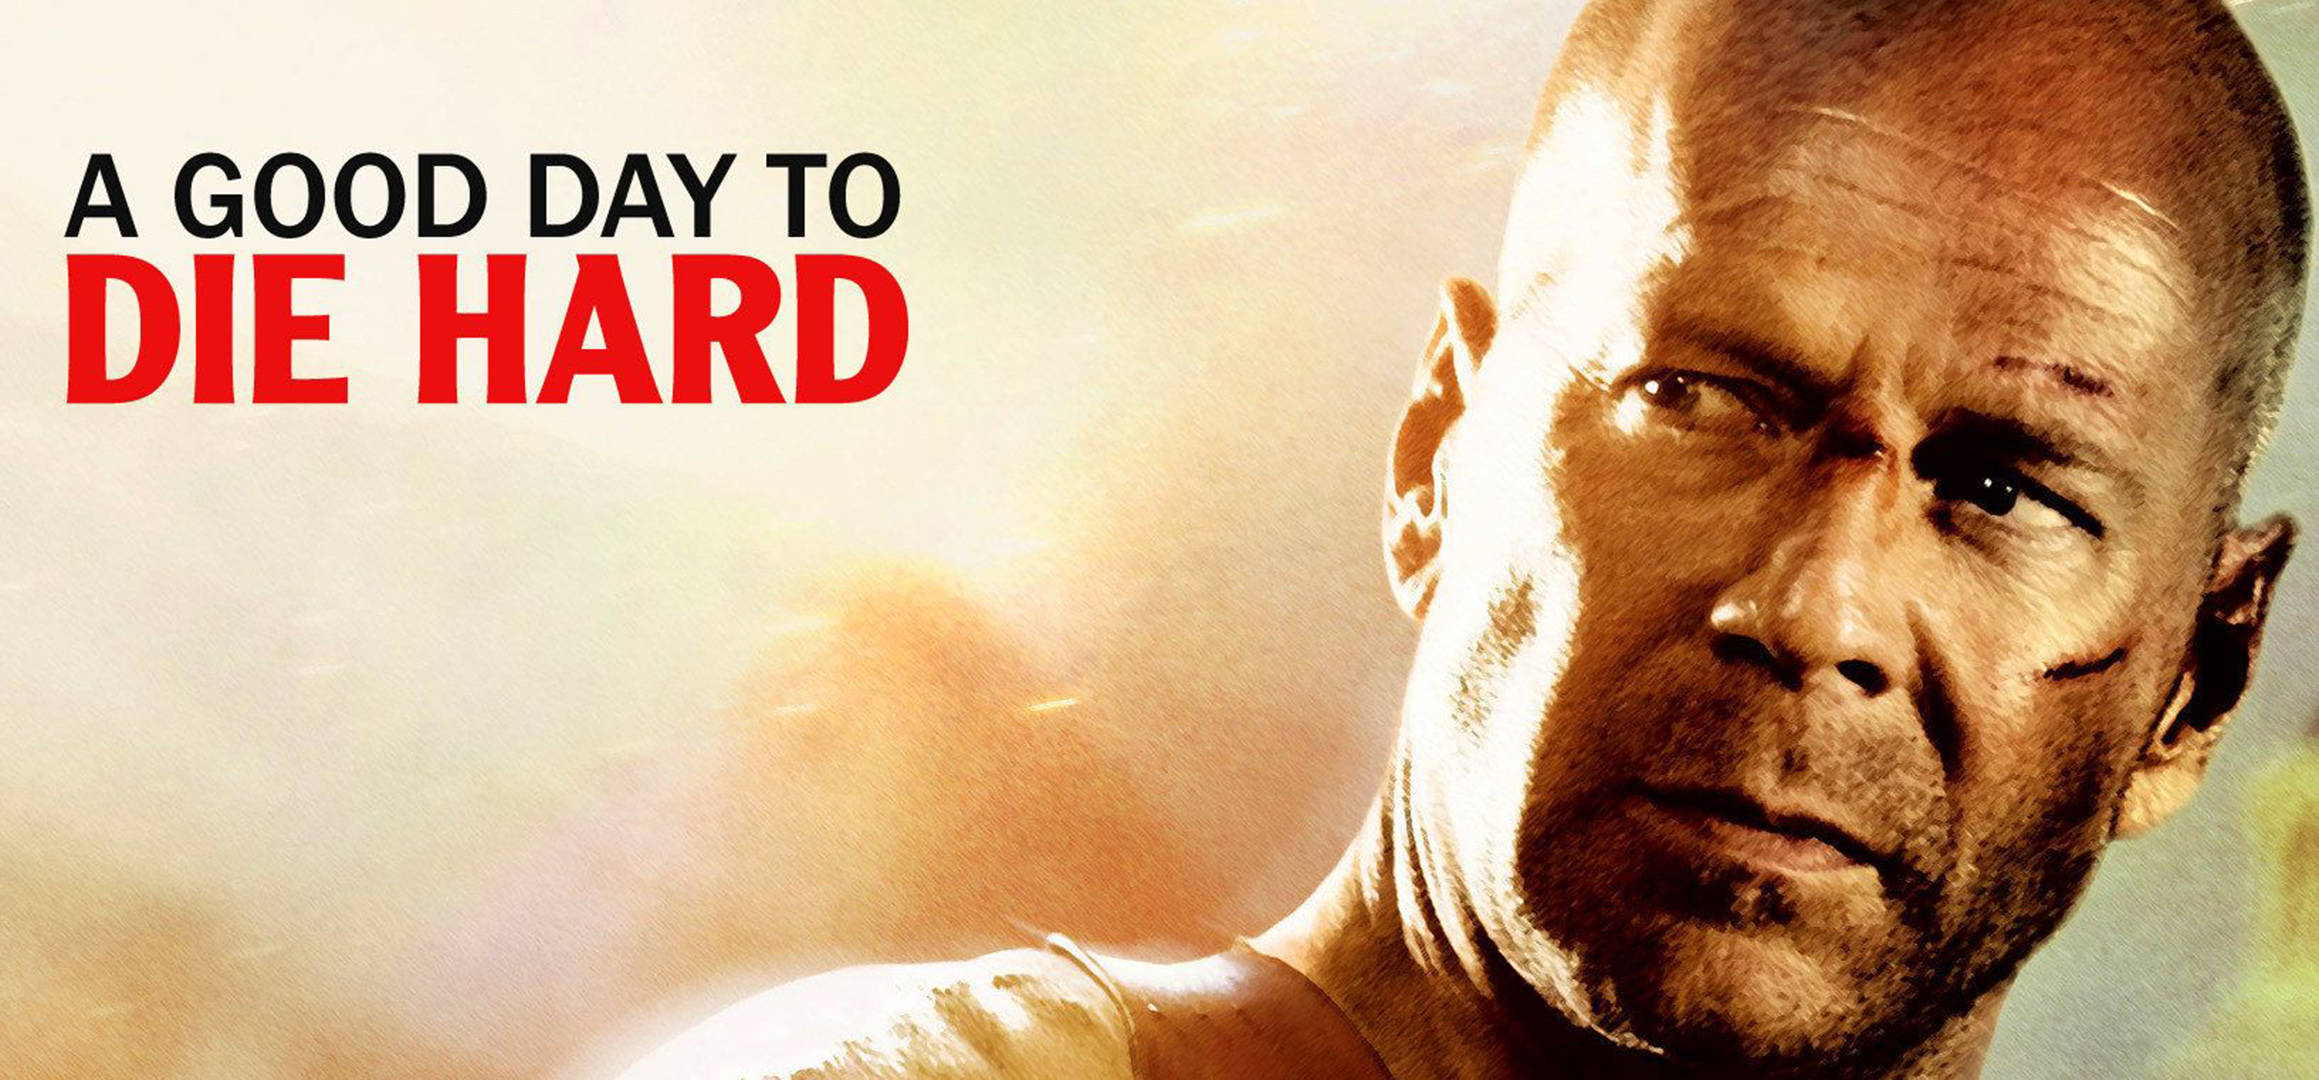 Bruce Willis As John Mcclane In Action Wallpaper